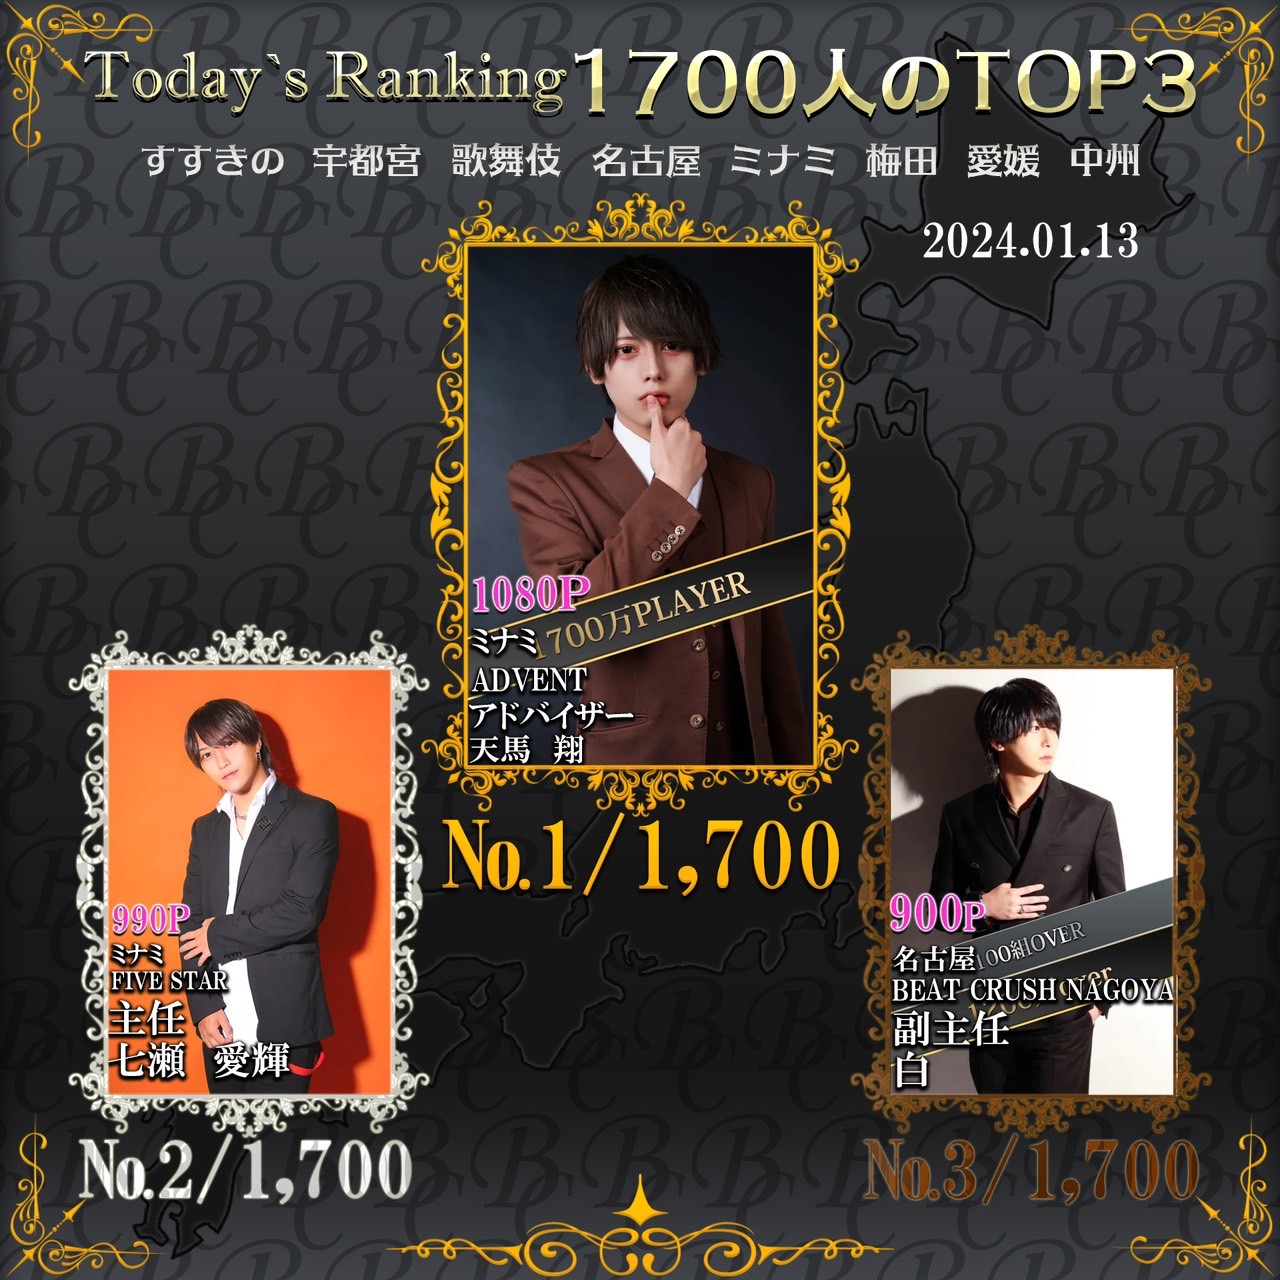 1/13  Today’s Ranking